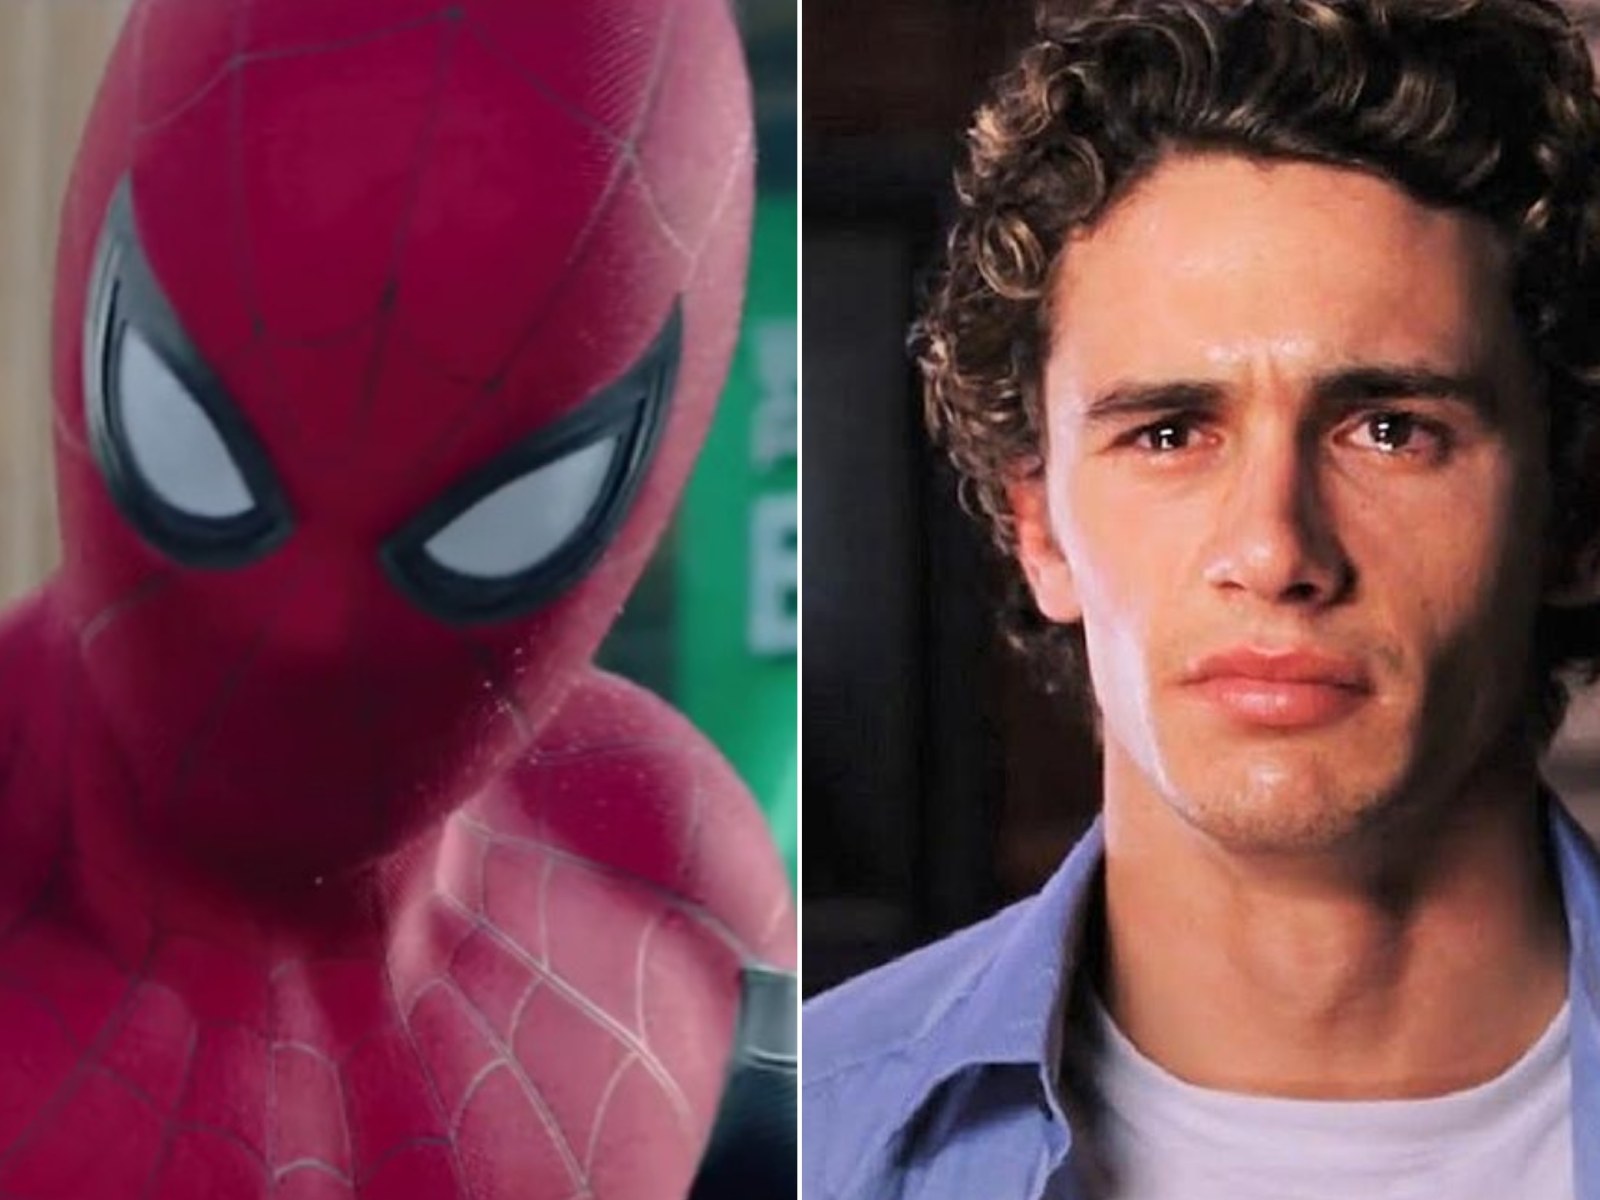 Harry Osborn actor not returning for 'Marvel's Spider-Man 2